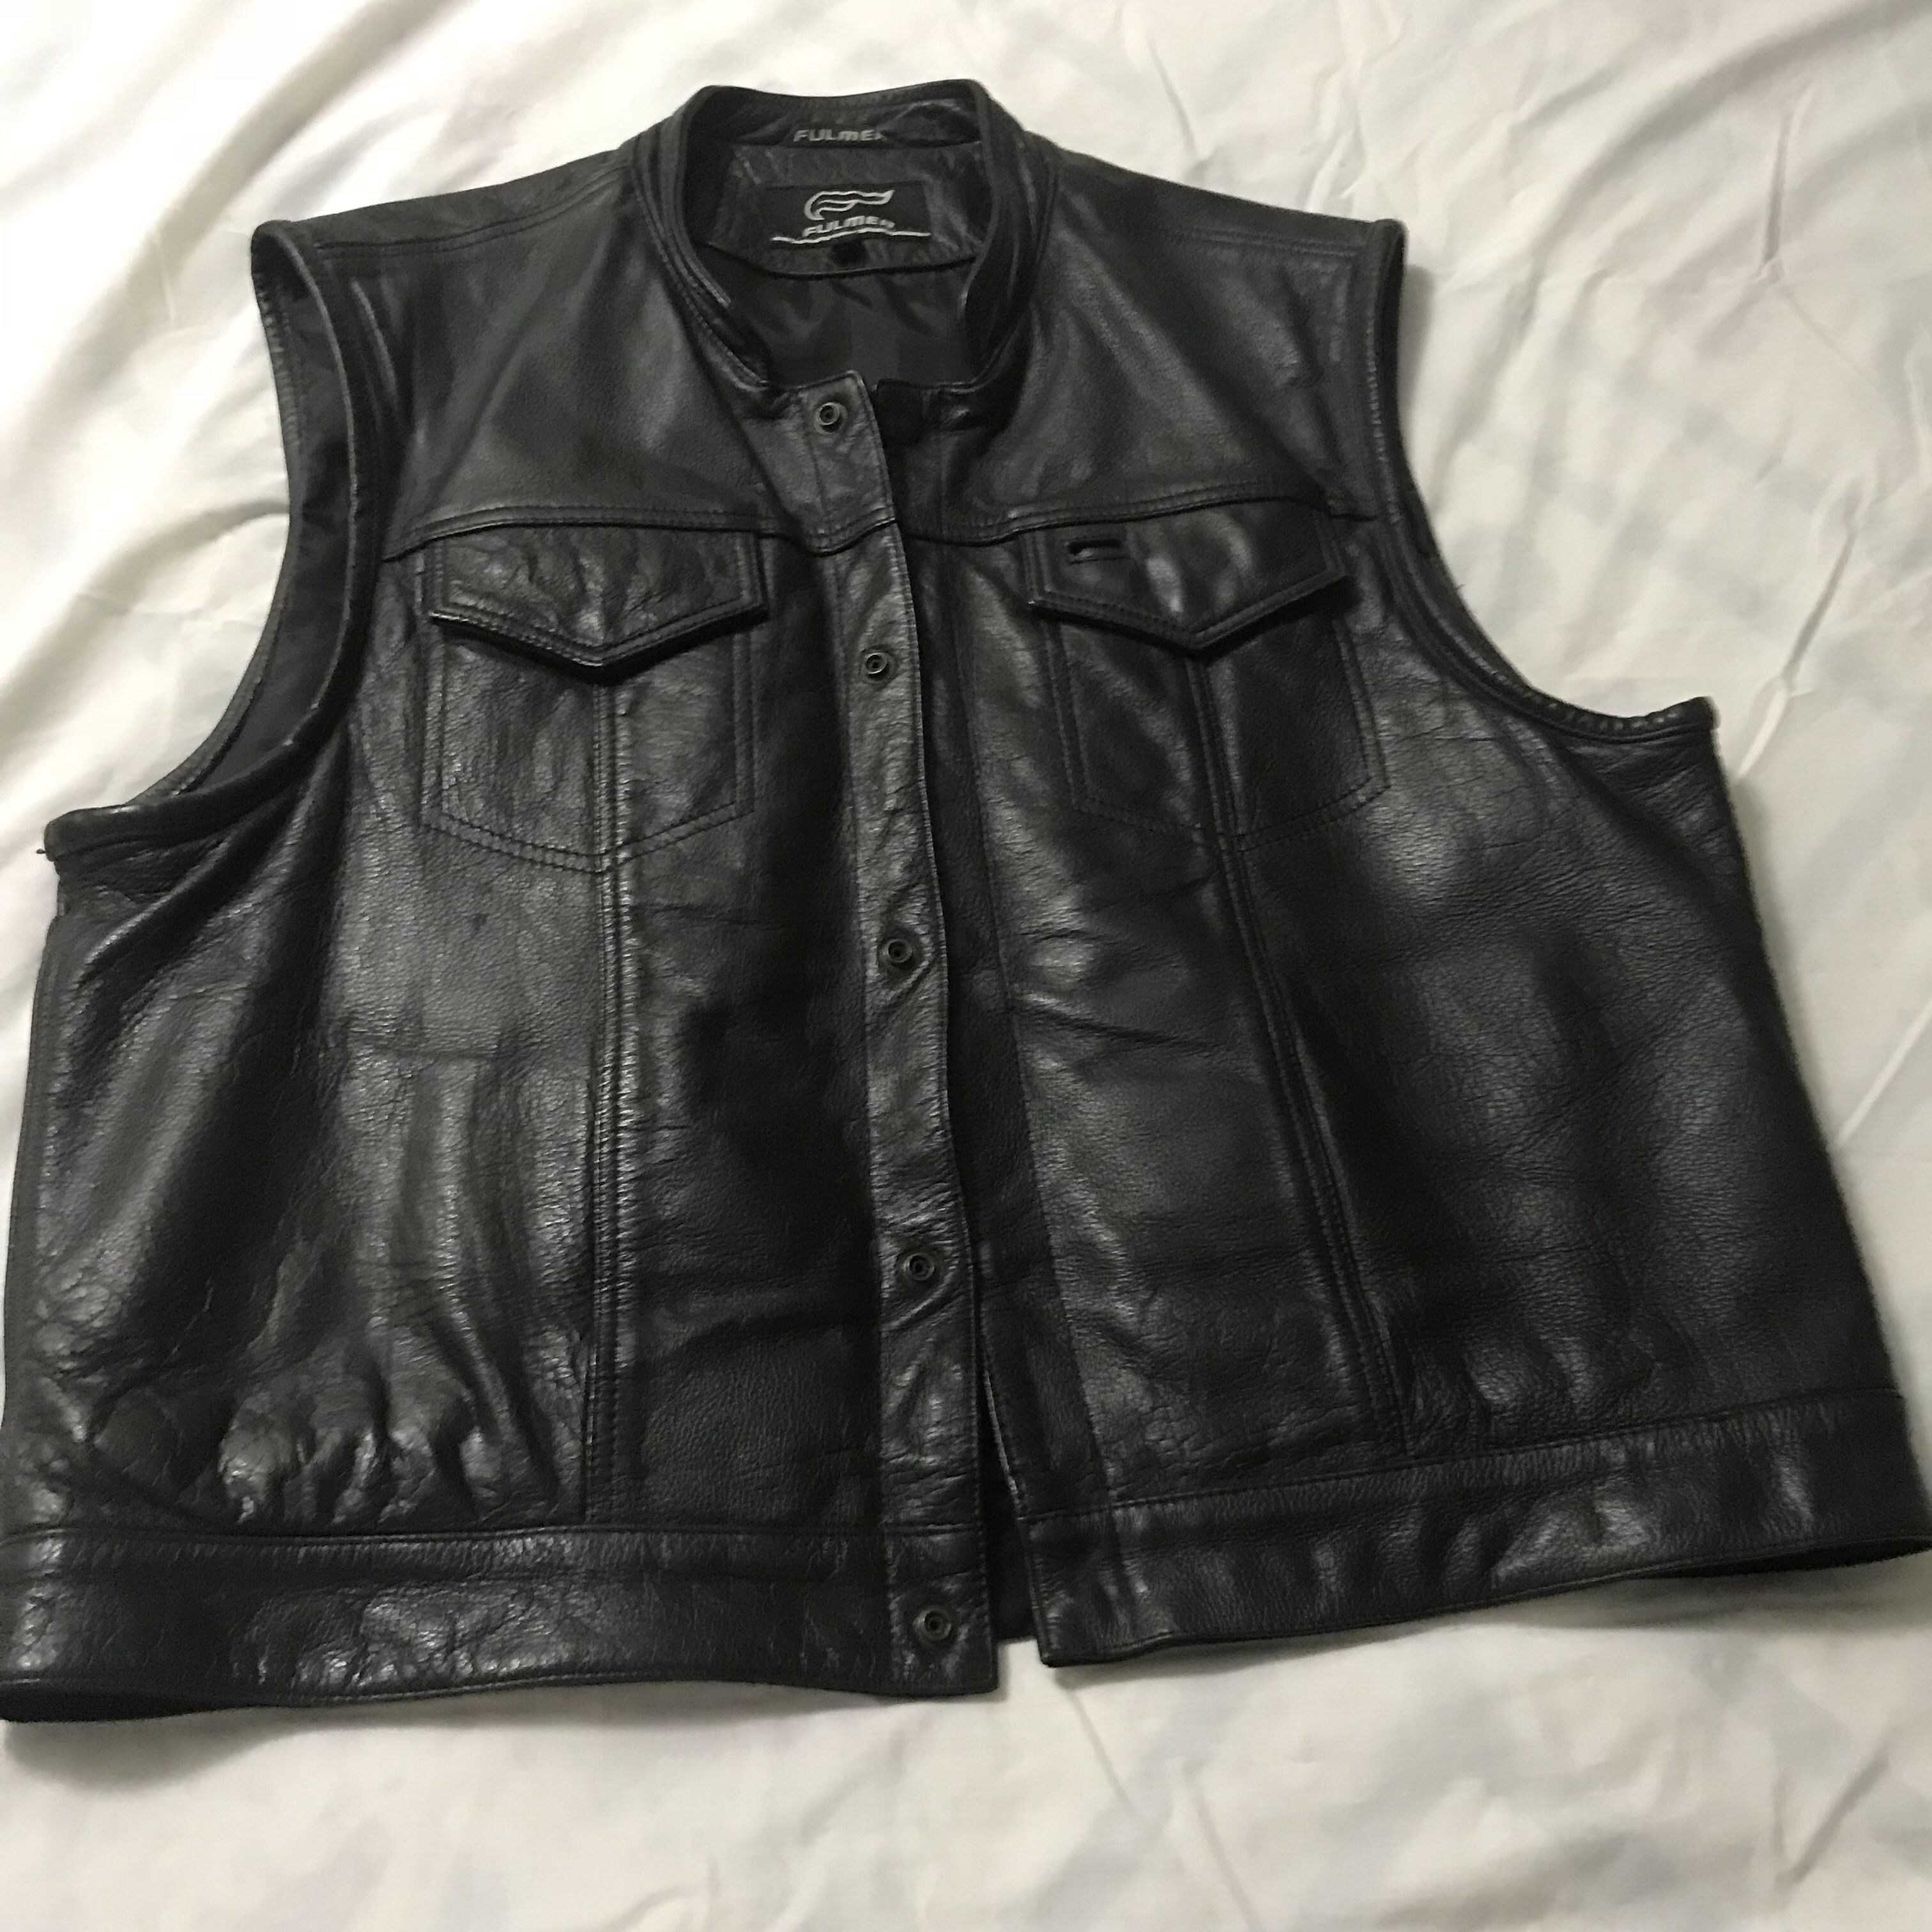 Men’s two XL motorcycle vest